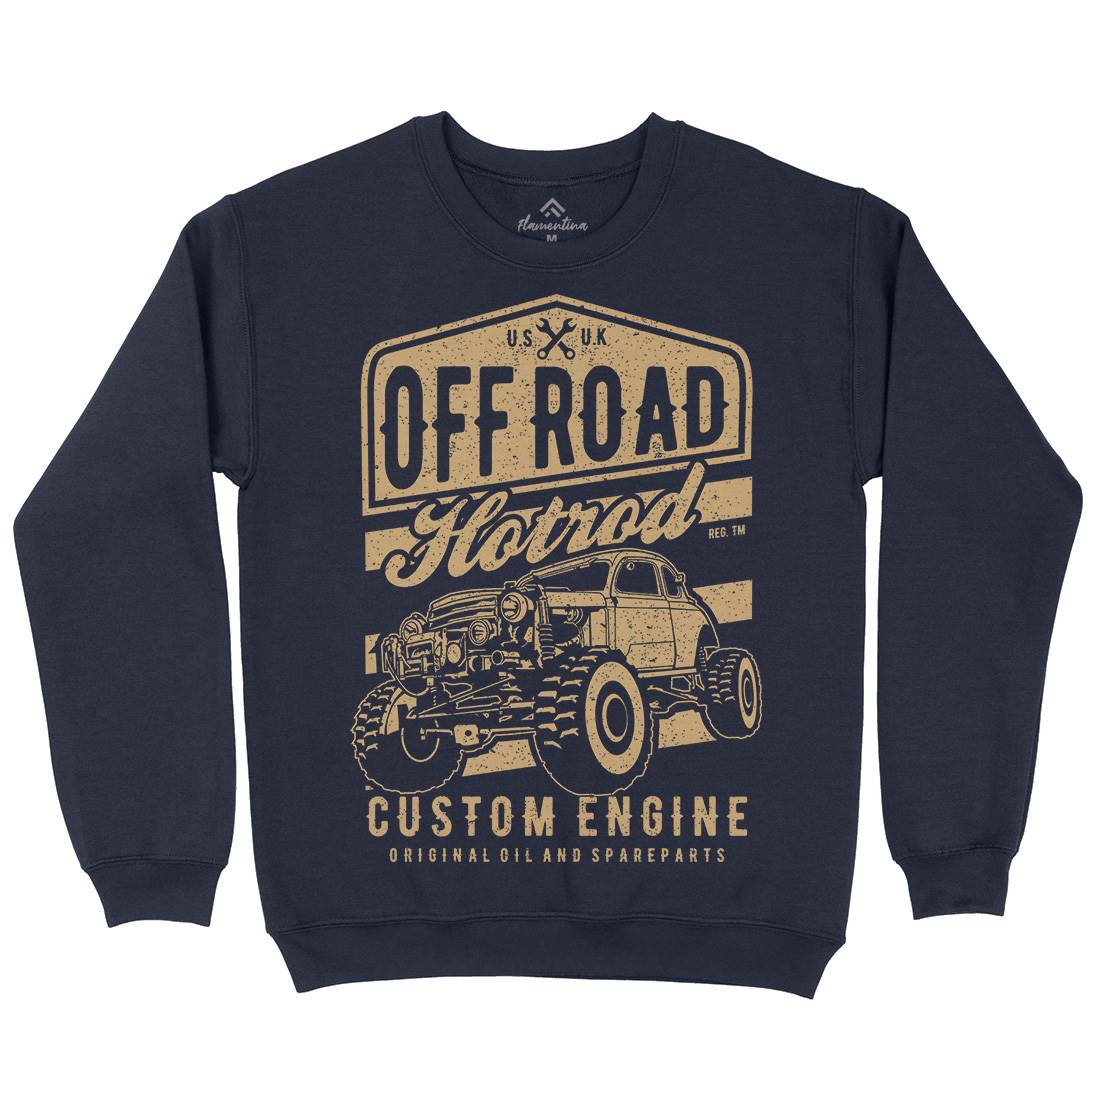 Offroad Hotrod Kids Crew Neck Sweatshirt Cars A730